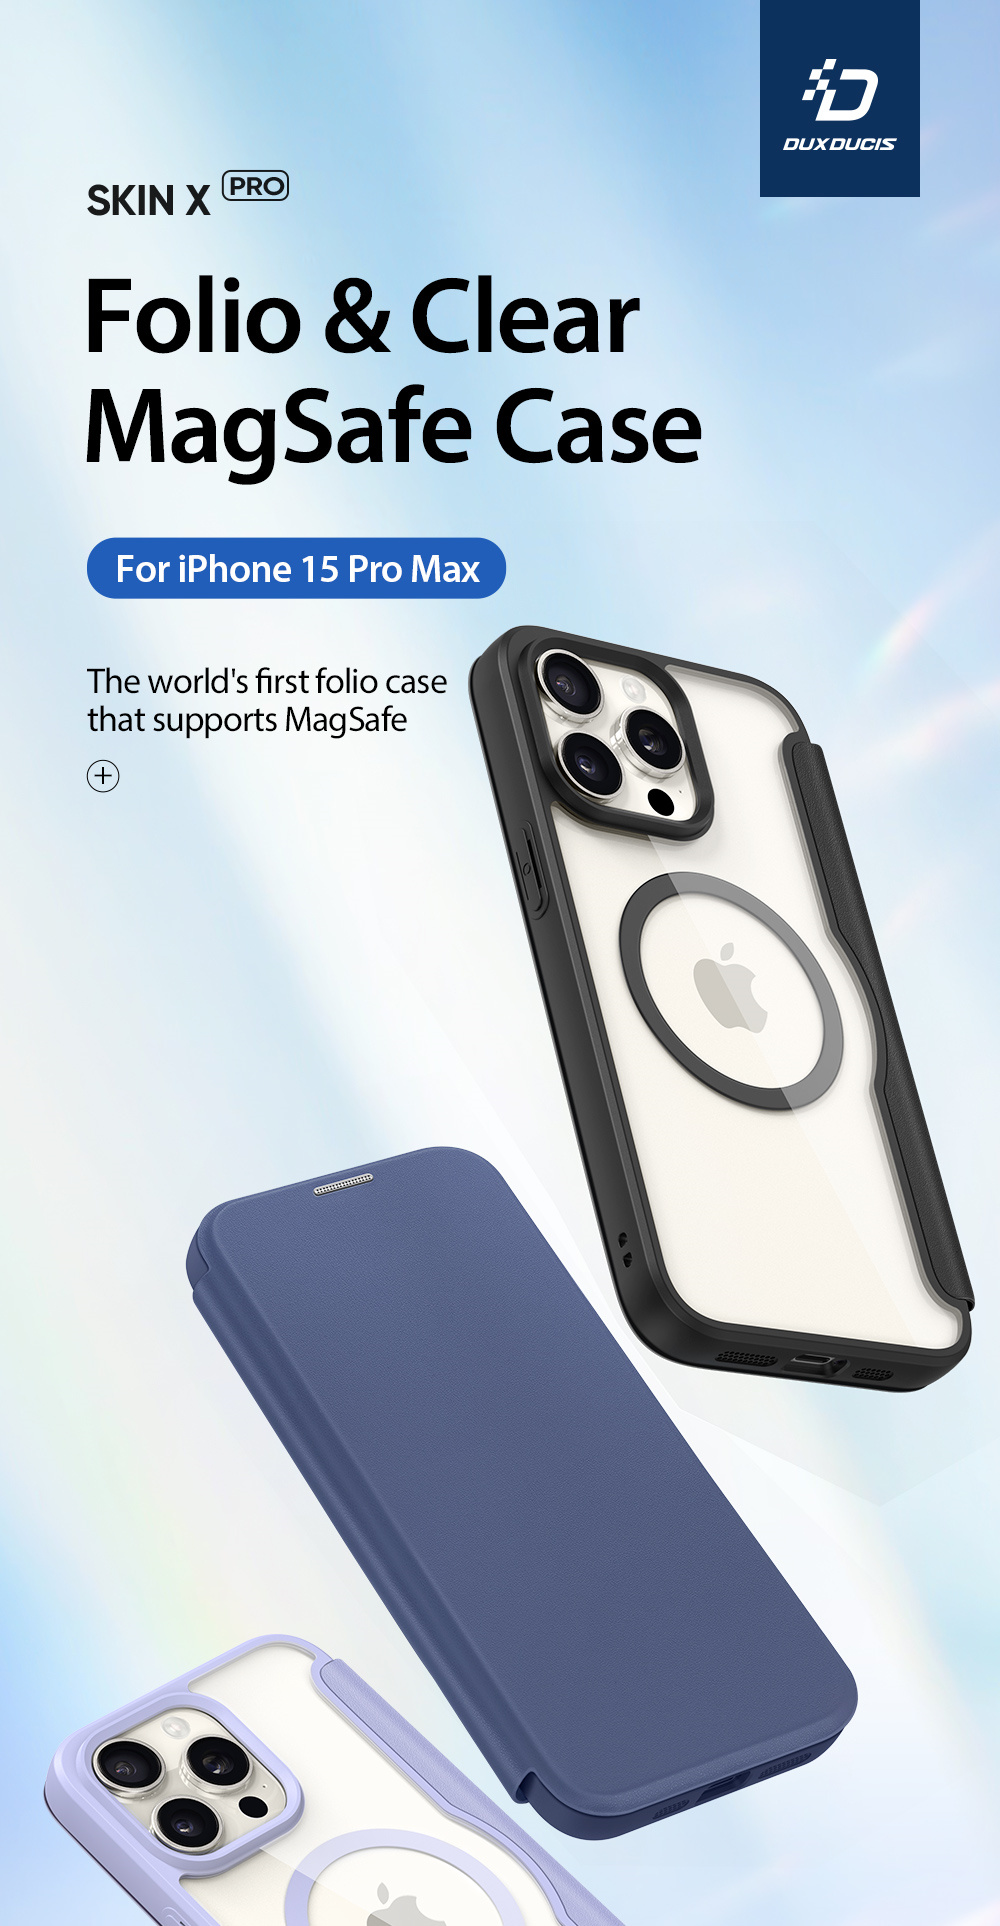 Bao Da Iphone 15 Pro Max Chinh Hang Dux Ducis Skin X Pro Ho Tro Magsafe Lung Trong Co Khay Cai The (1)